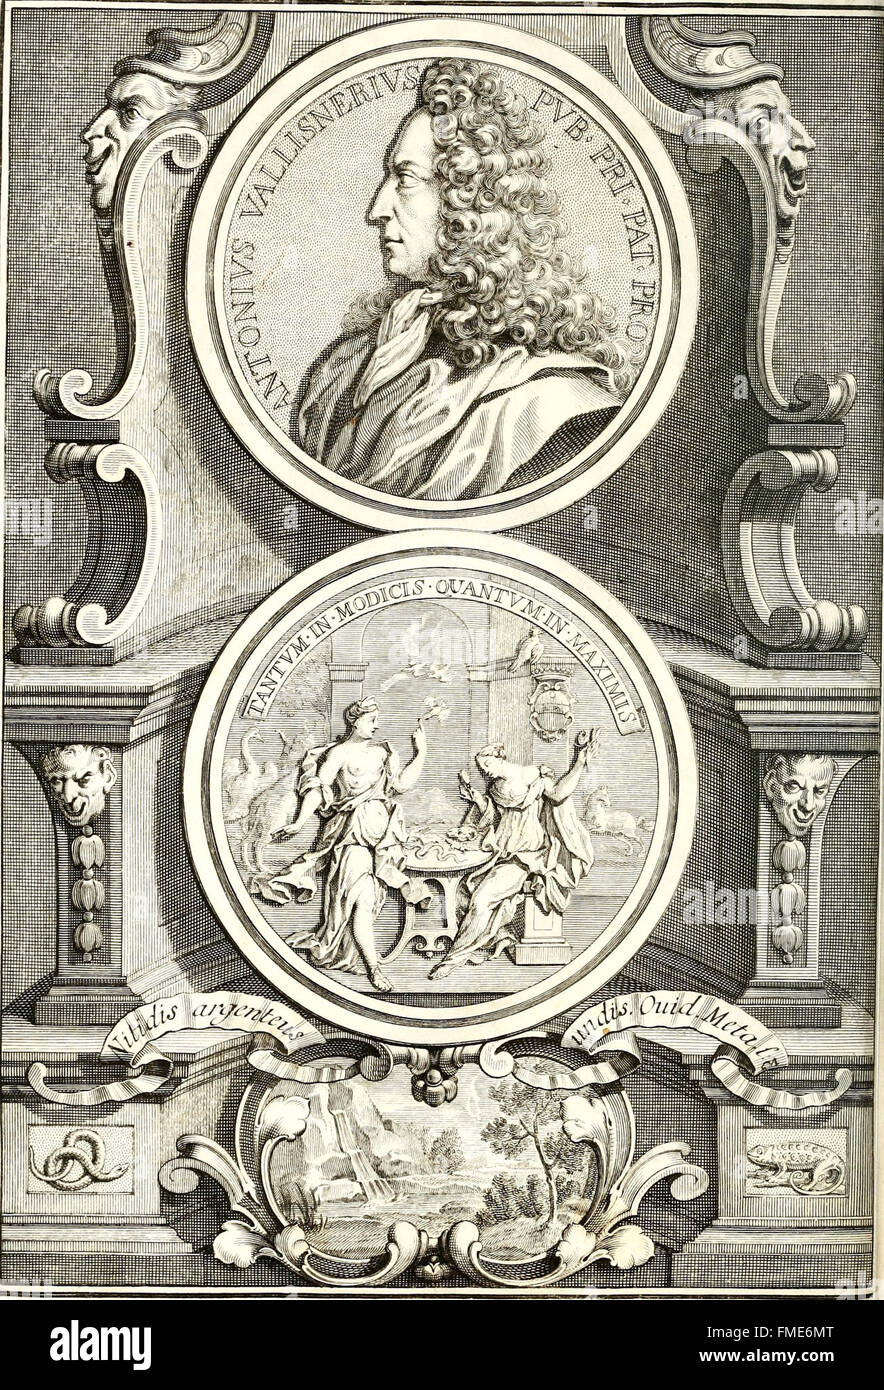 Lezione accademica et autour de l'origine delle fontane - con le annotazioni par chiarezza maggiore la croissance (1726) Banque D'Images